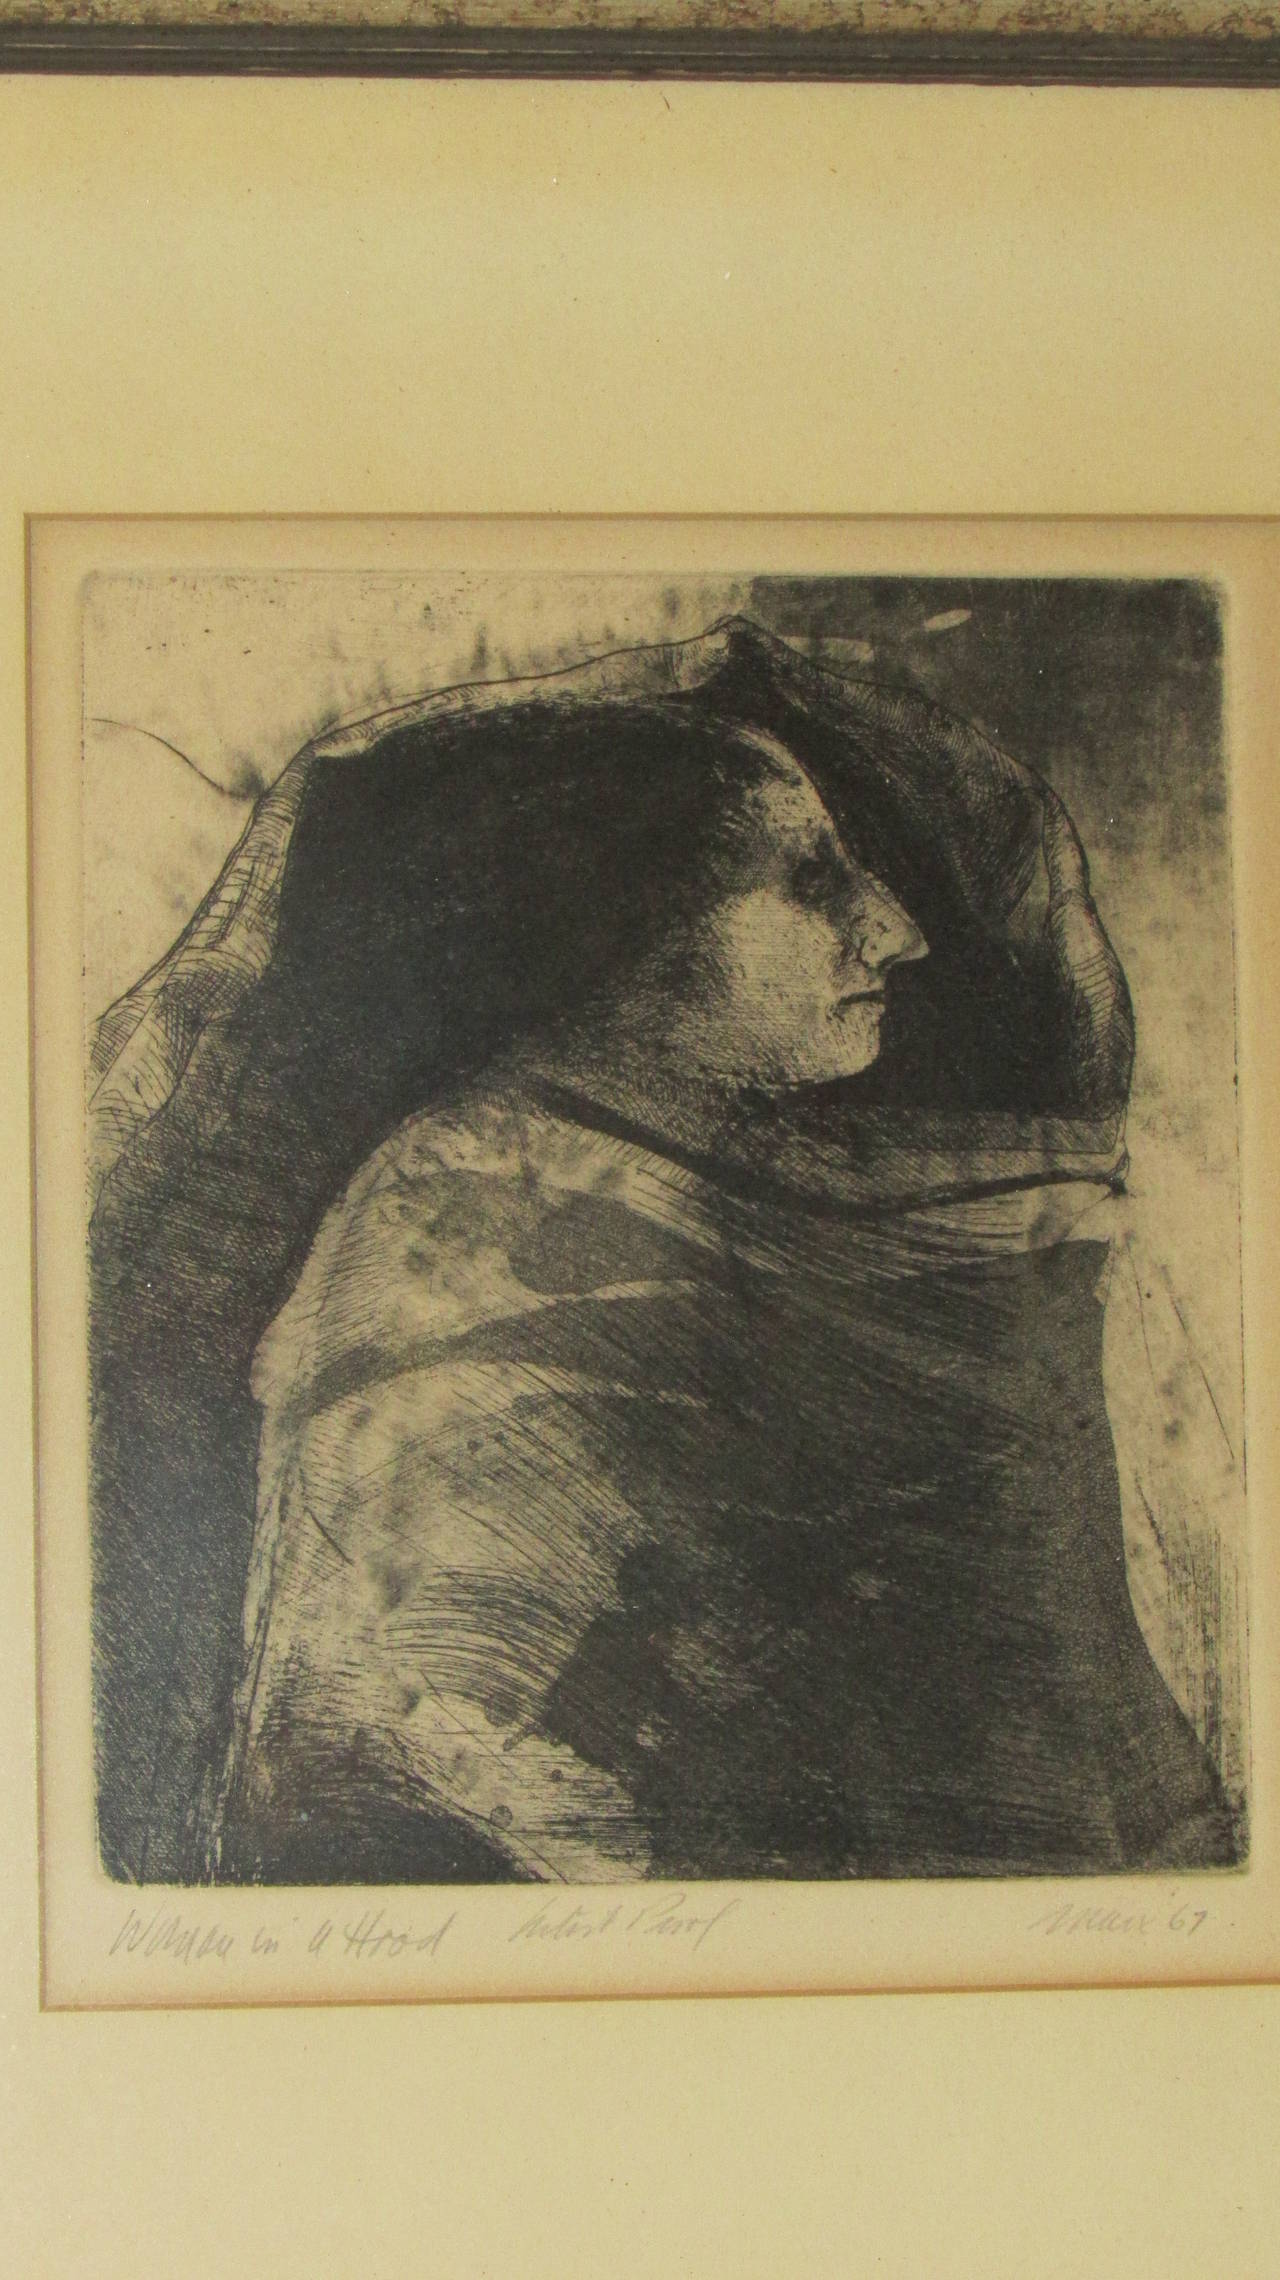 American Woman in a Hood by Robert Marx - 1967